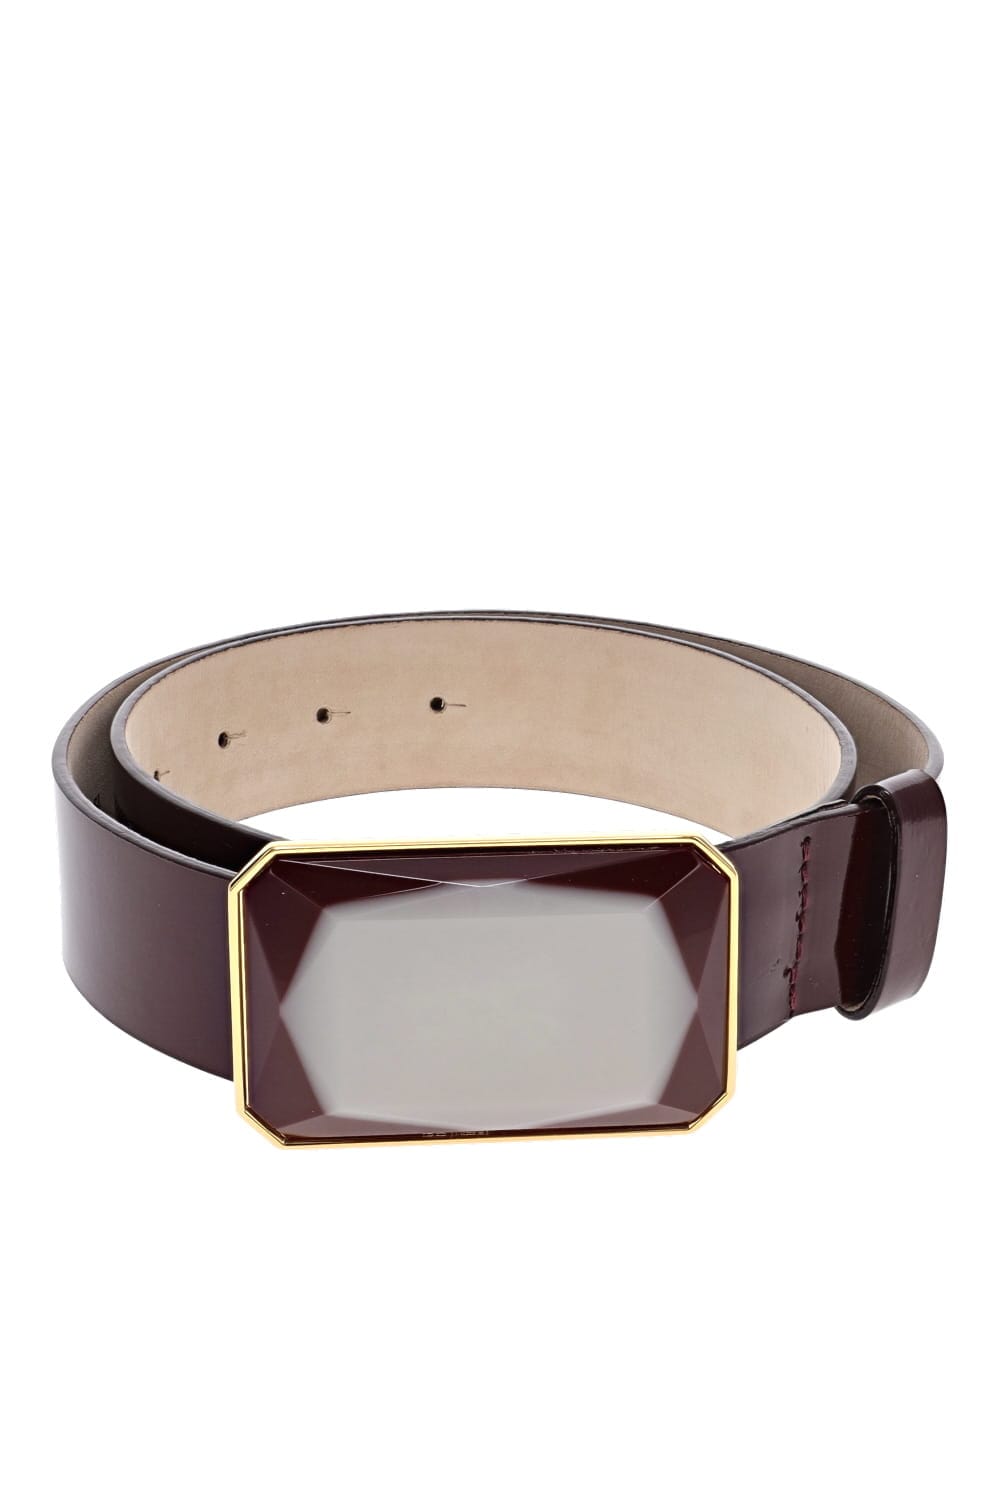 Silvia Tcherassi Dora leather belt - Brown